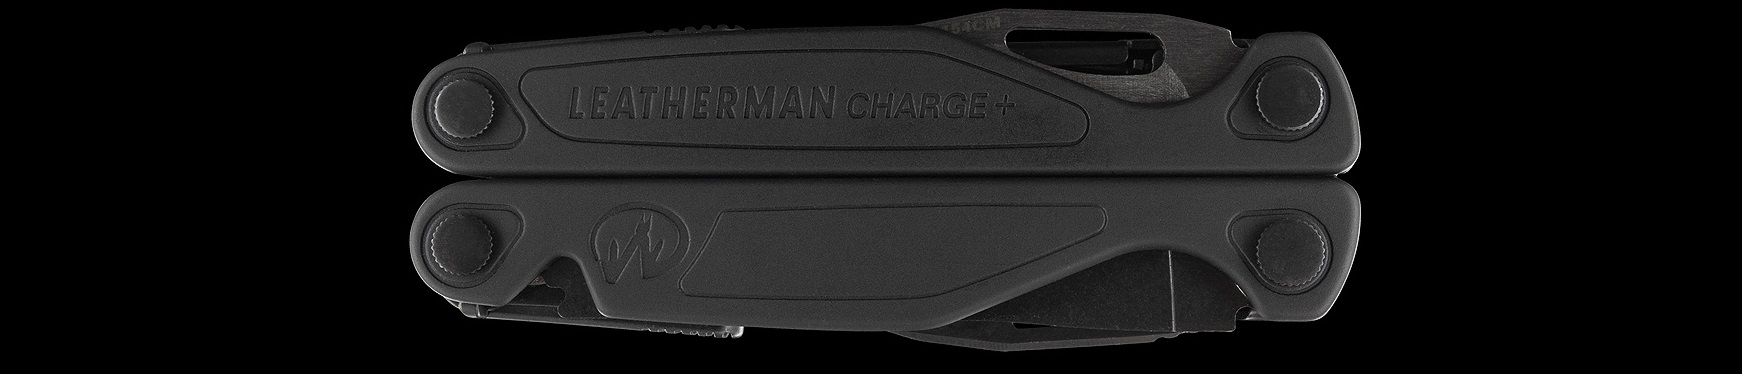 Легкий мультиинструмент Leatherman Charge Plus Black